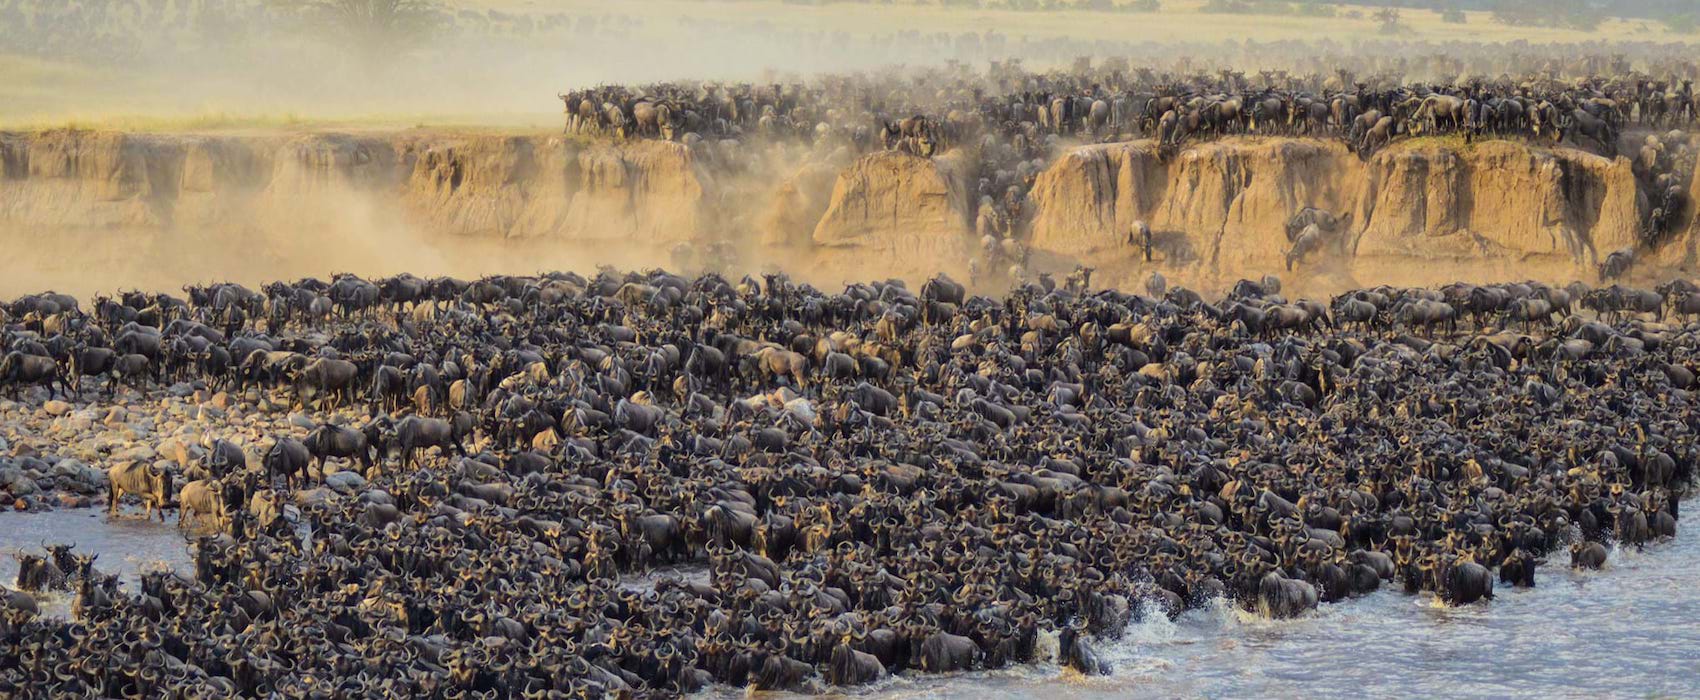 The Wildebeest Migration in Serengeti, Tanzania